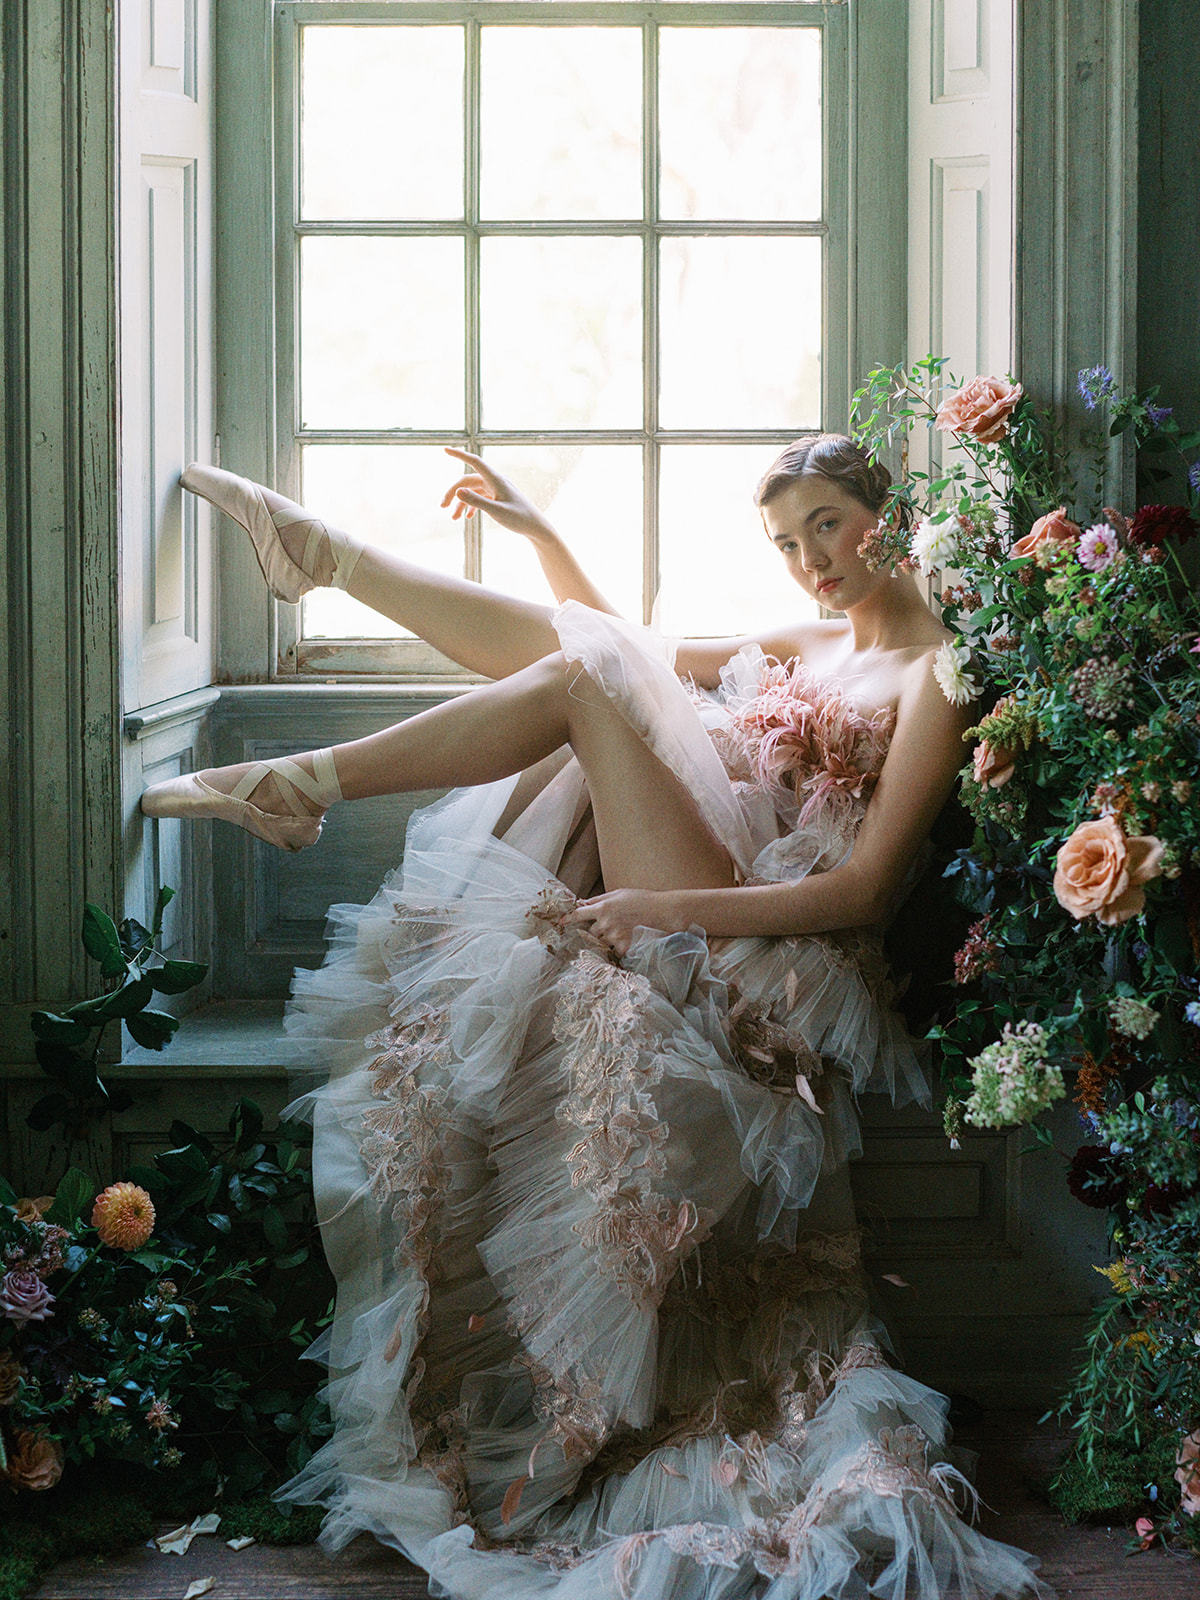 Fashion Shoot with Ballet Theme in a Garden